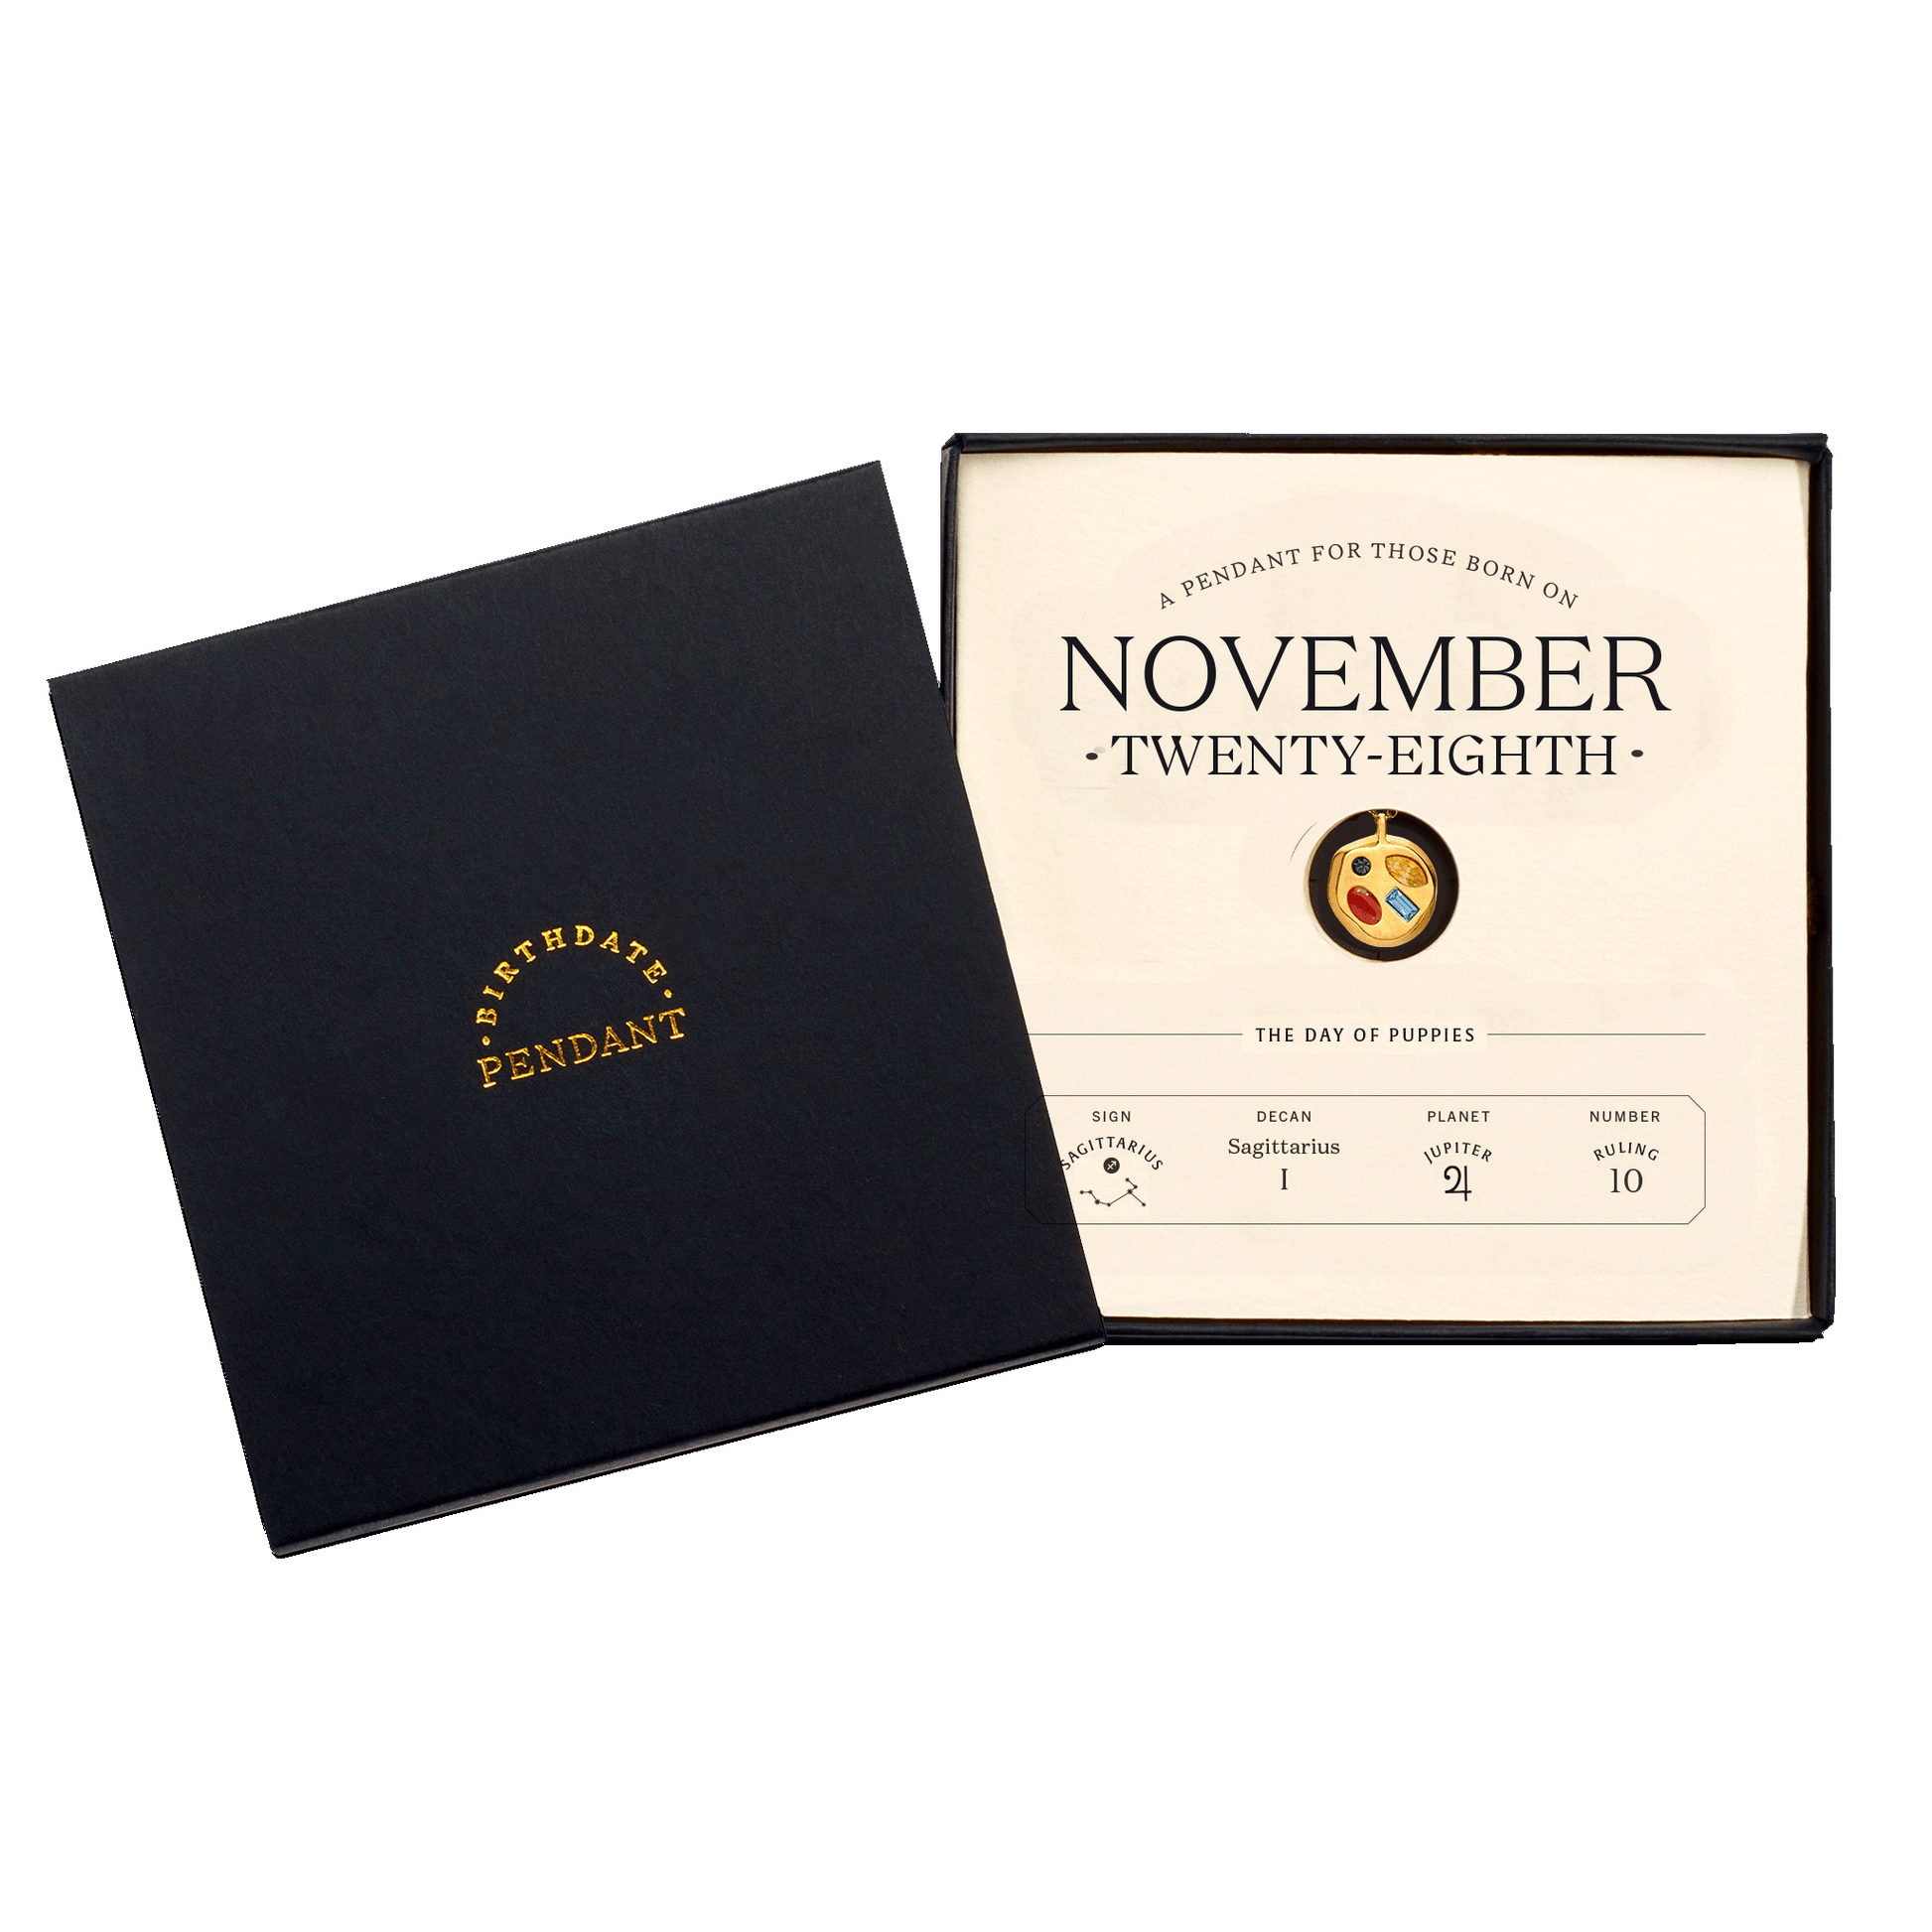 The November Twenty-Eighth Pendant inside its box